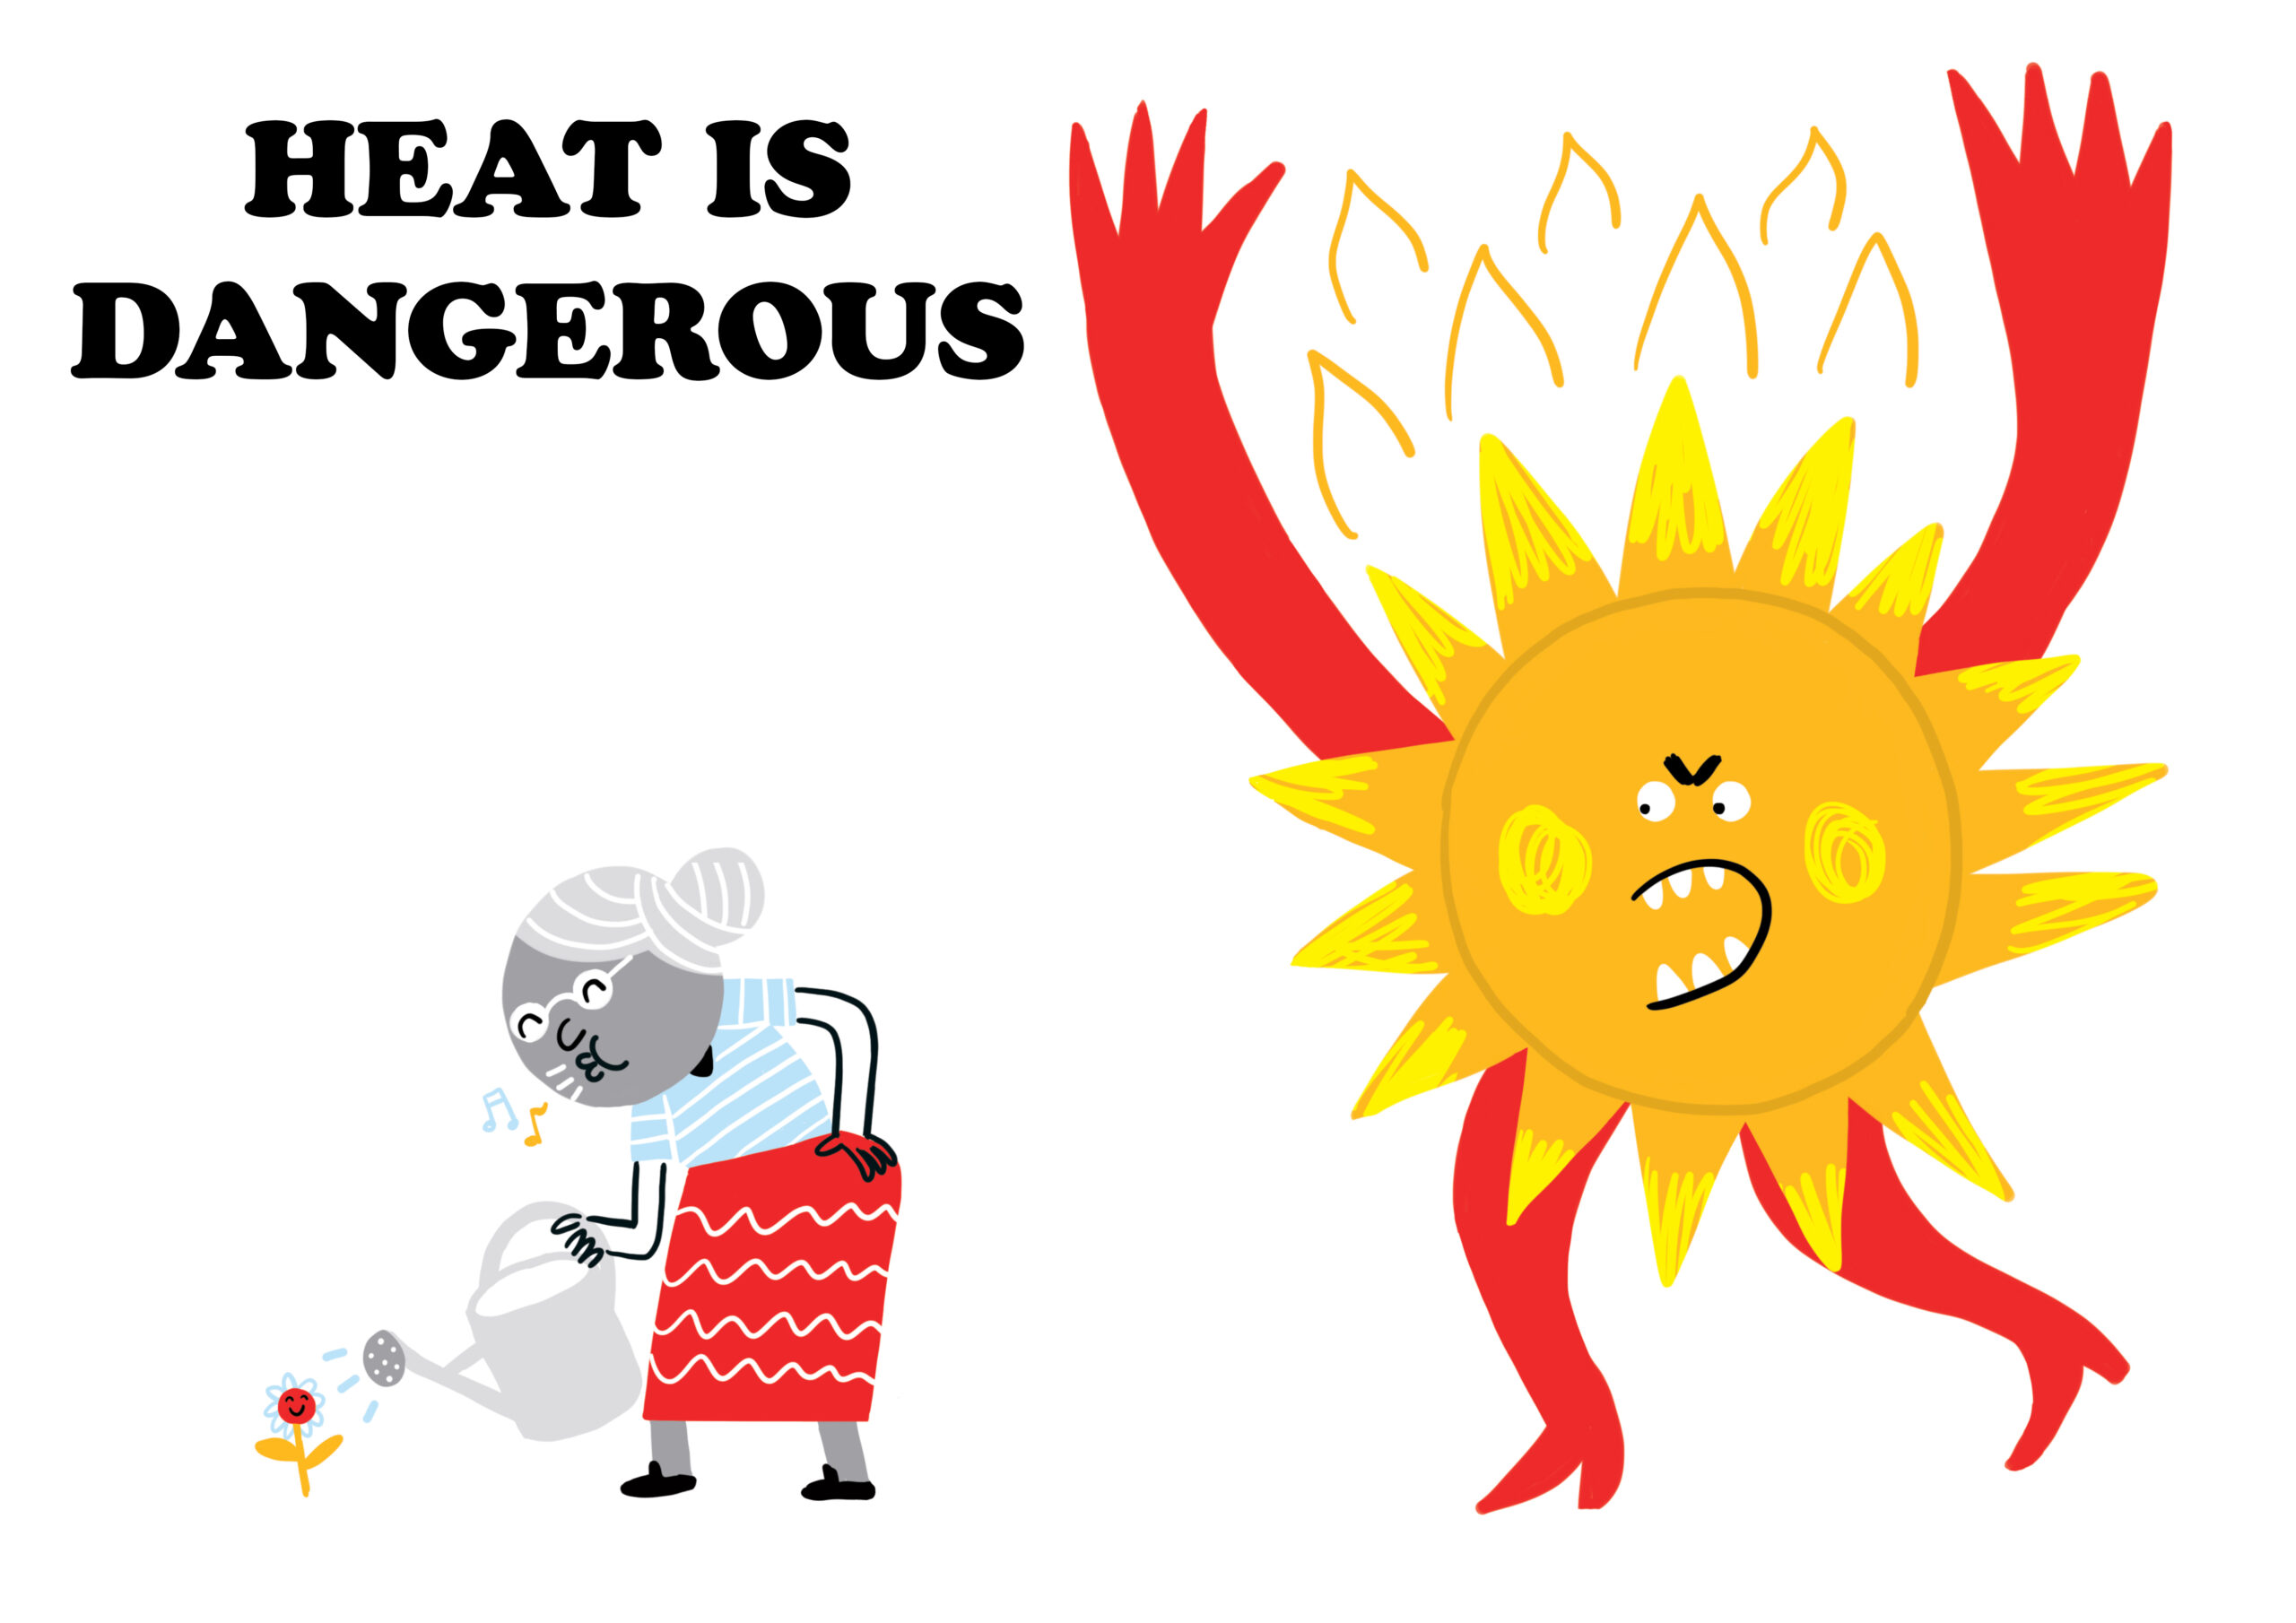 English_Dangerous Heat